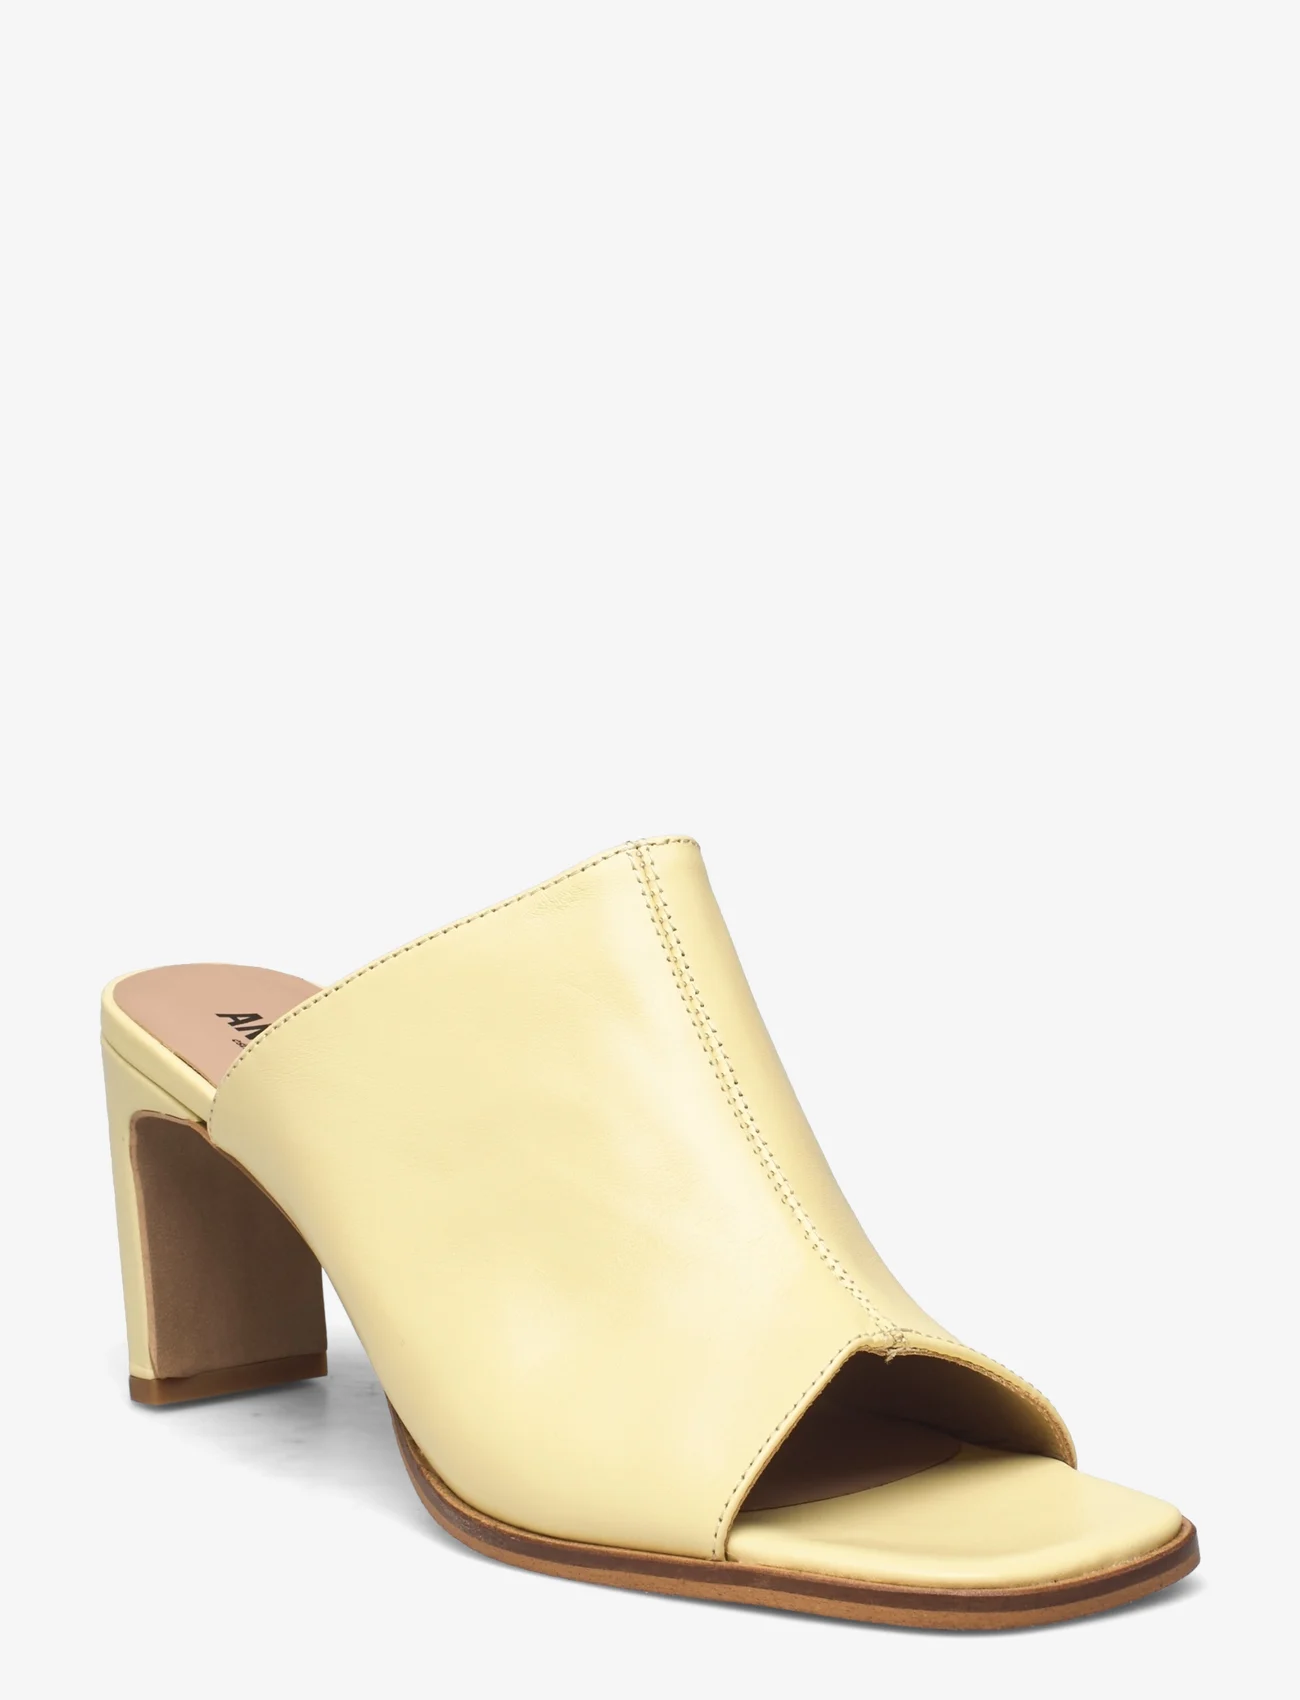 ANGULUS - Sandals - Block heels - basutės su kulnu - 1495 light yellow - 0